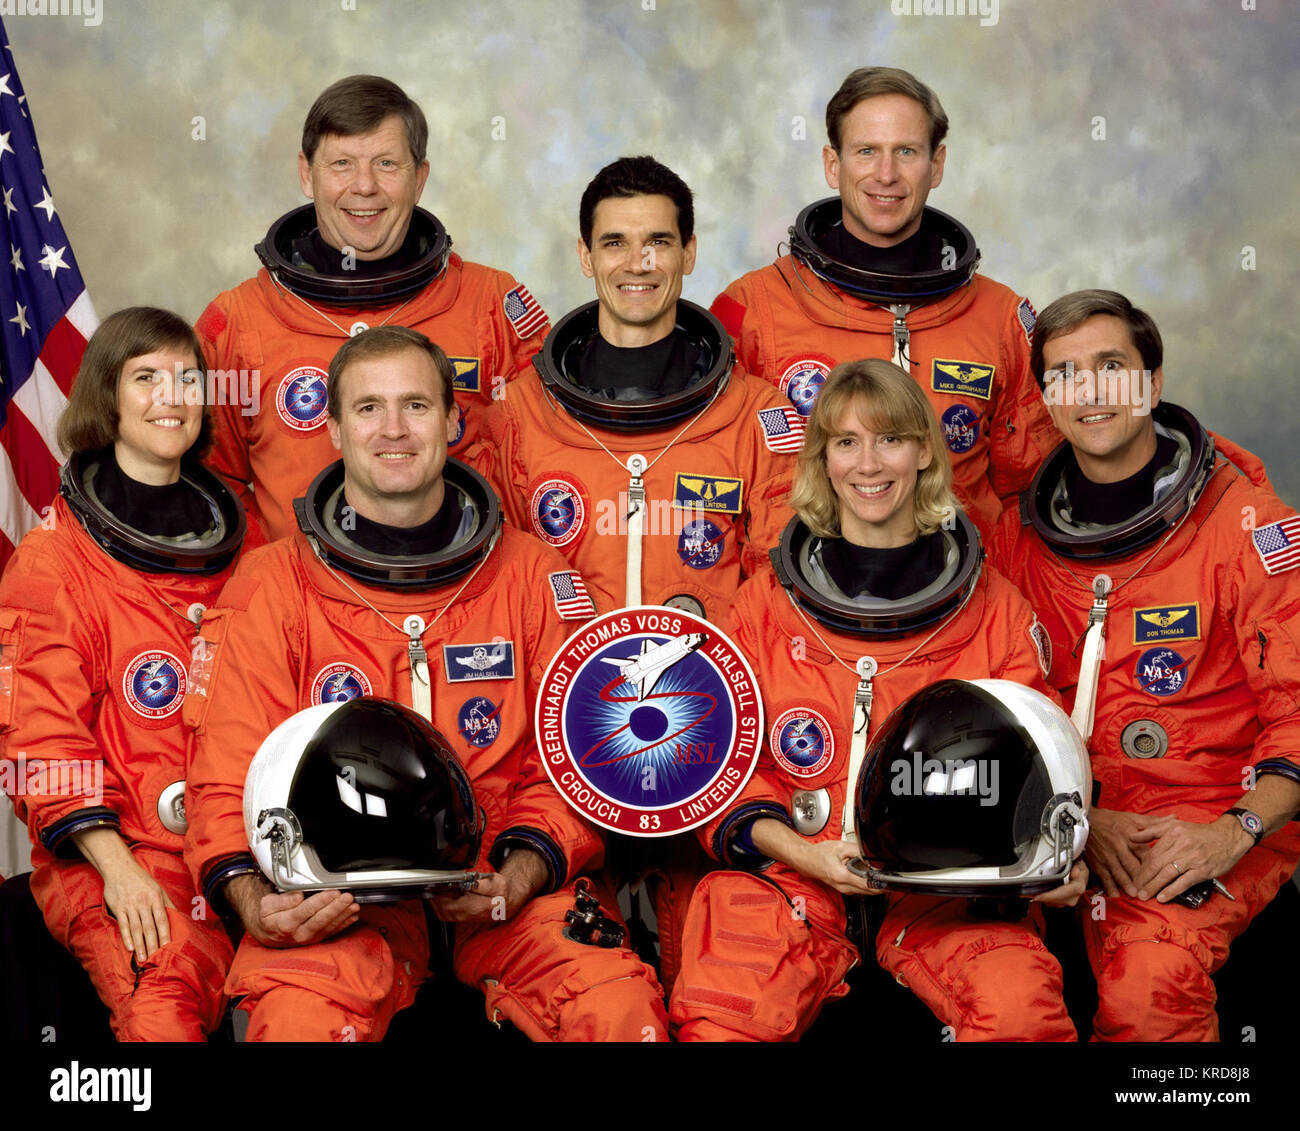 STS-083 CREW PORTRAIT CROUCH, ROGER; GERNHARDT, MIKE; VOSS, JANICE; LINTERIS, GREG; THOMAS, DON; HALSELL, JIM; STILL, SUSAN STS-83 crew Stock Photo